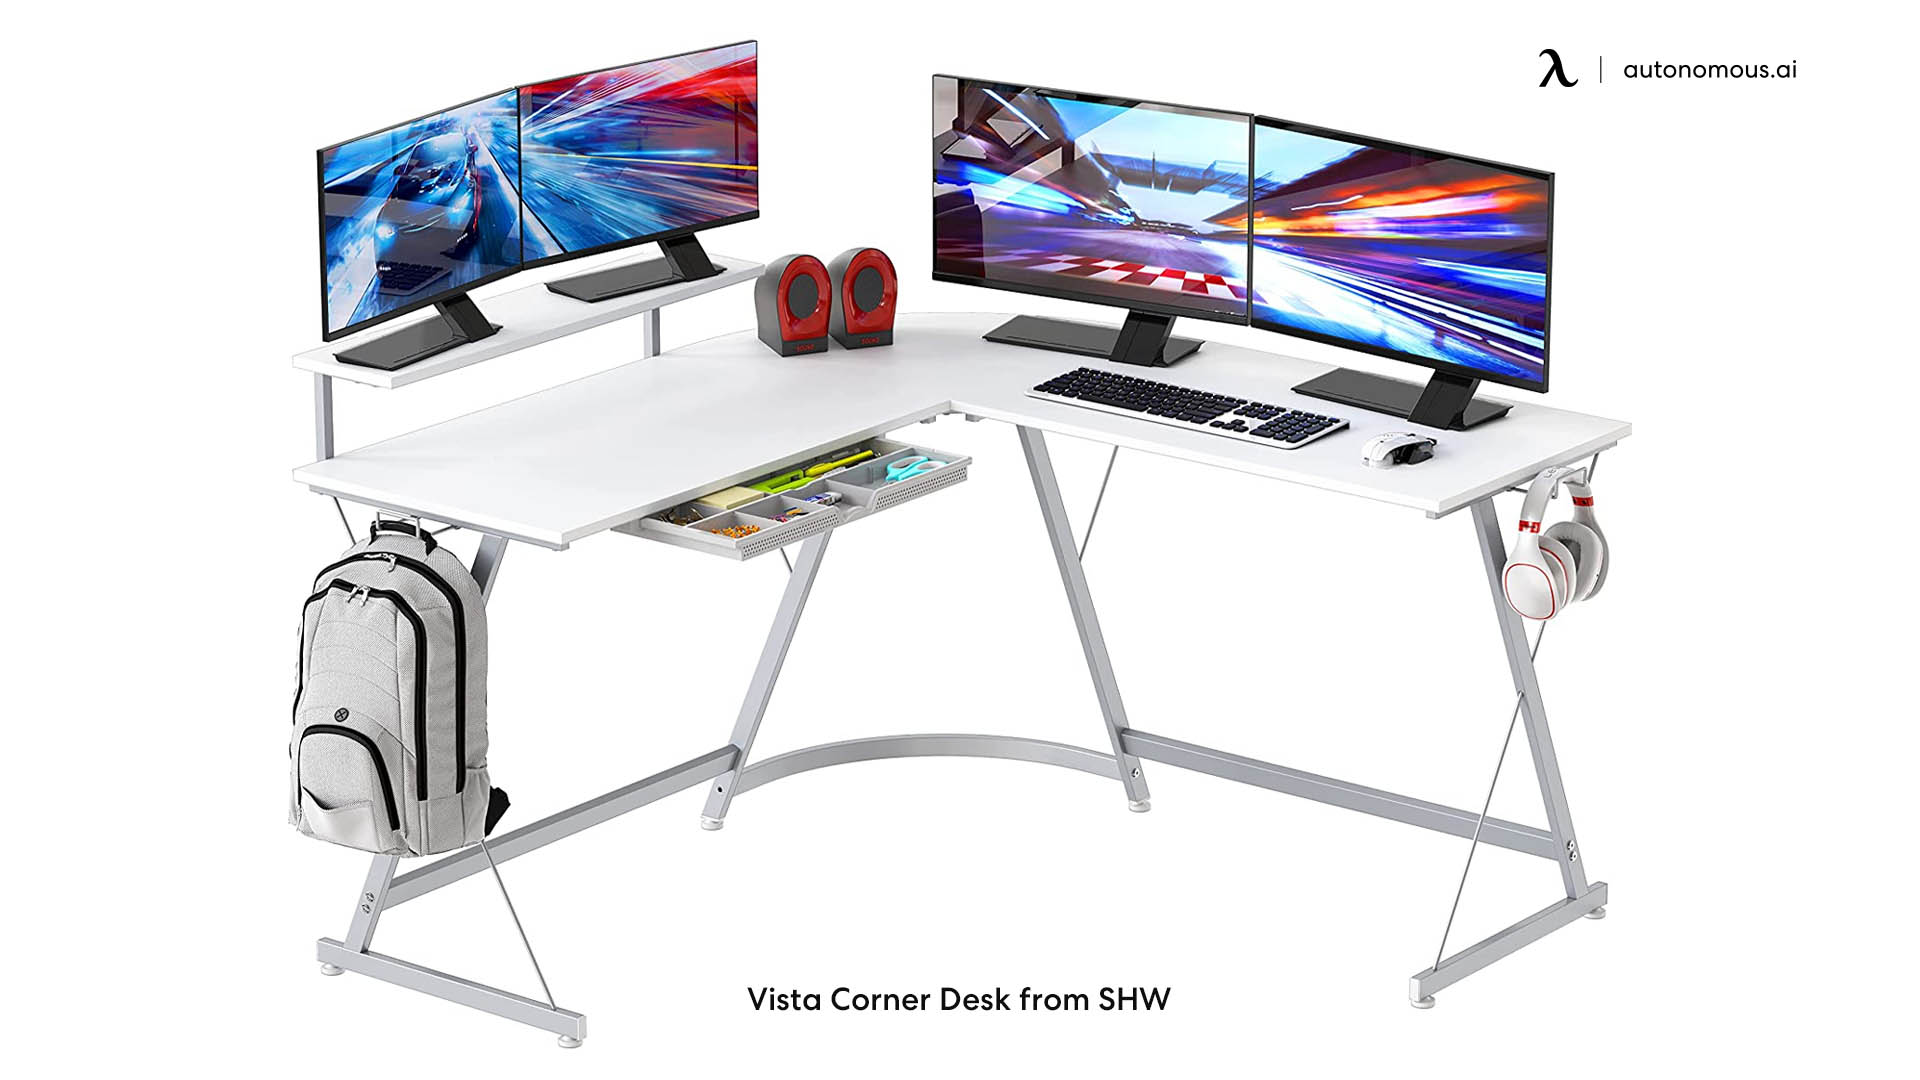 Vista Corner Desk from SHW